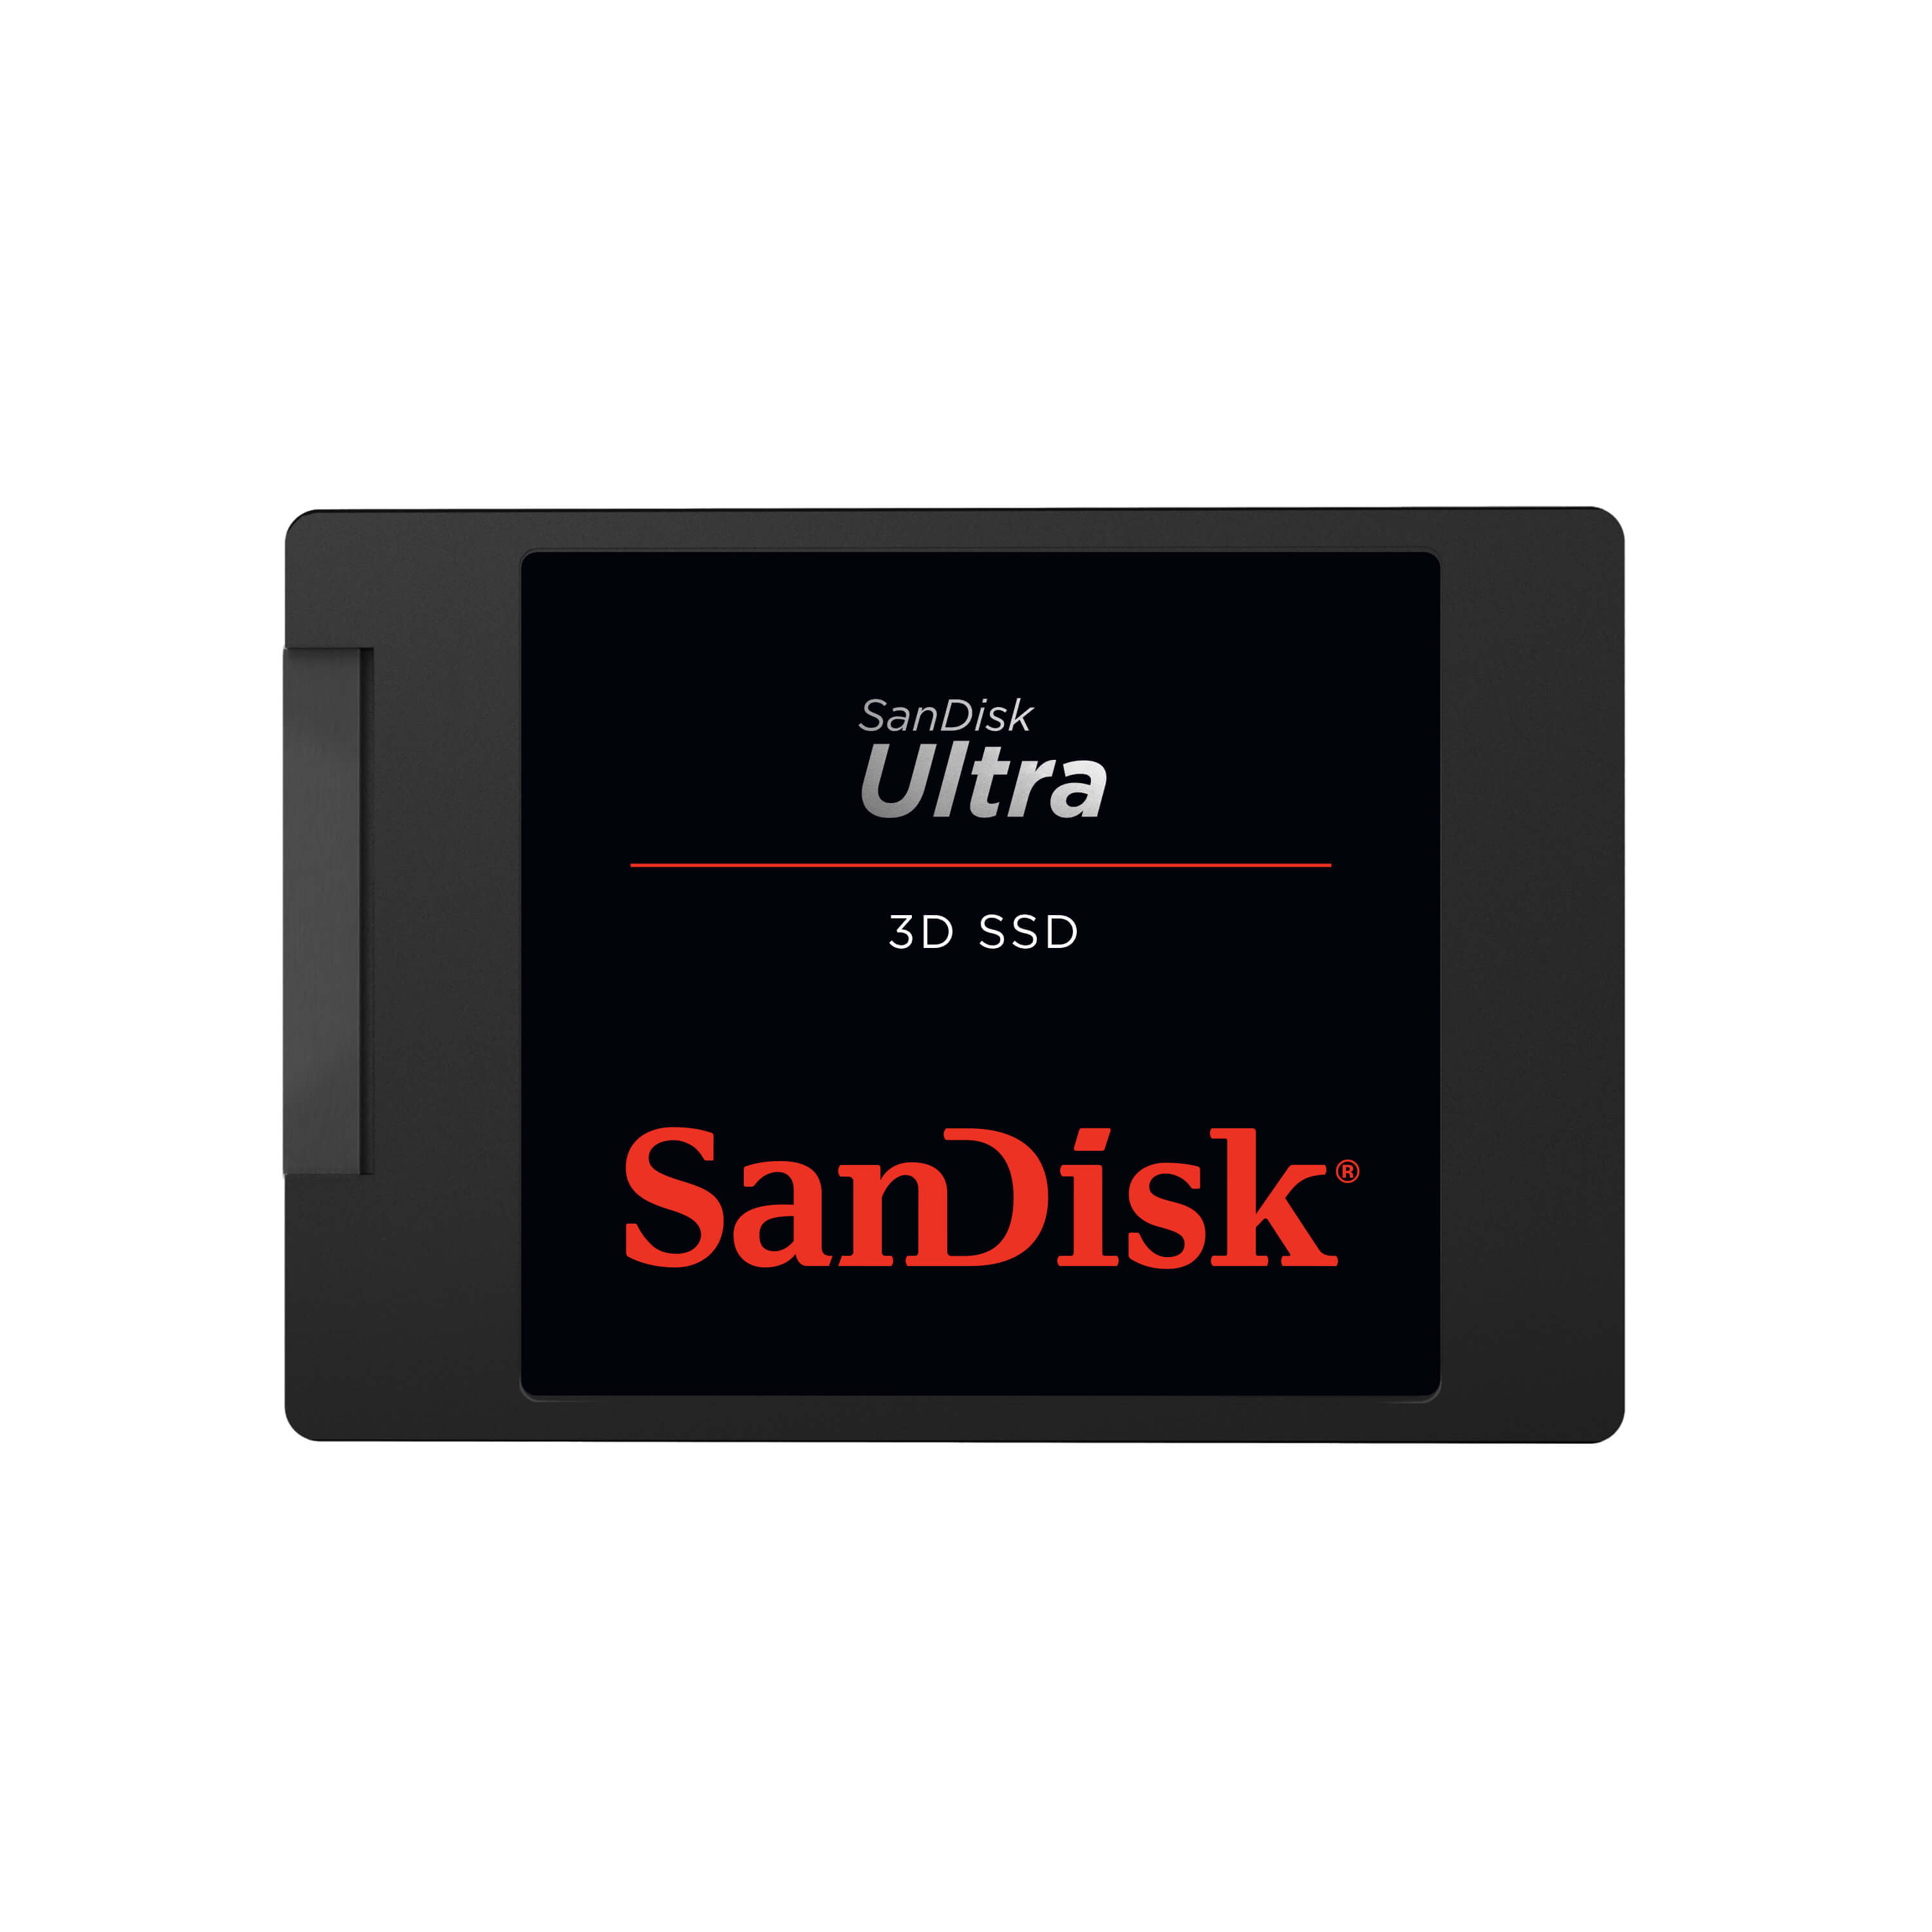 SANDISK SSD Ultra 3D 500GB 560MB/s Read 530MB/s Write